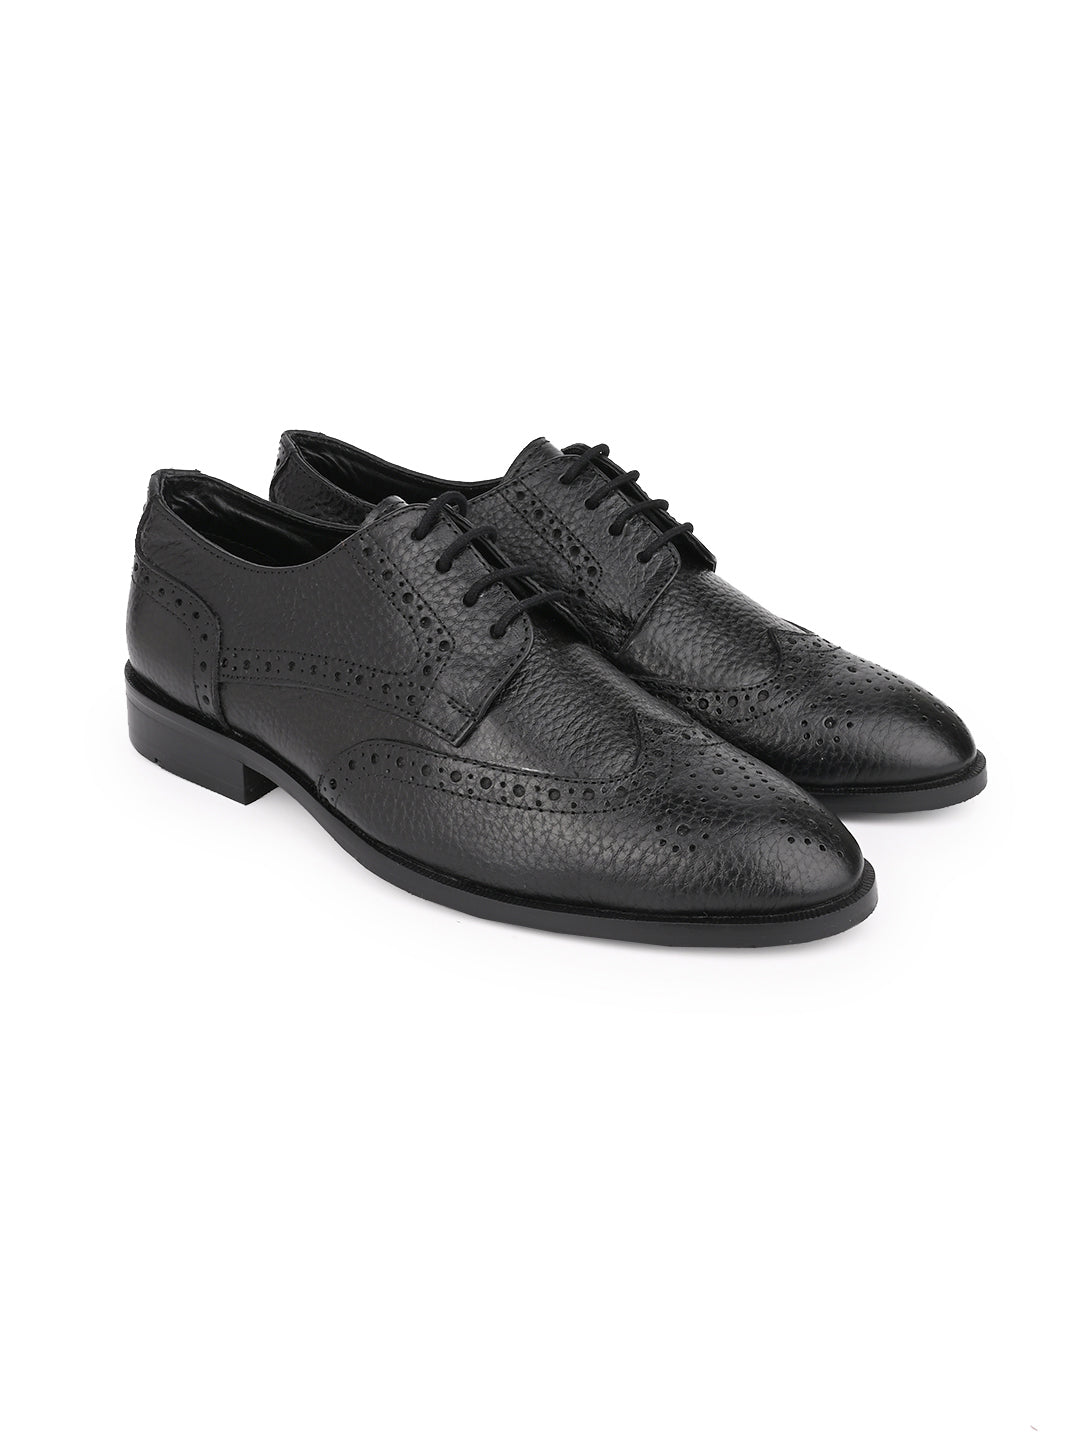 Men Black Textured Brogue Formal shoes